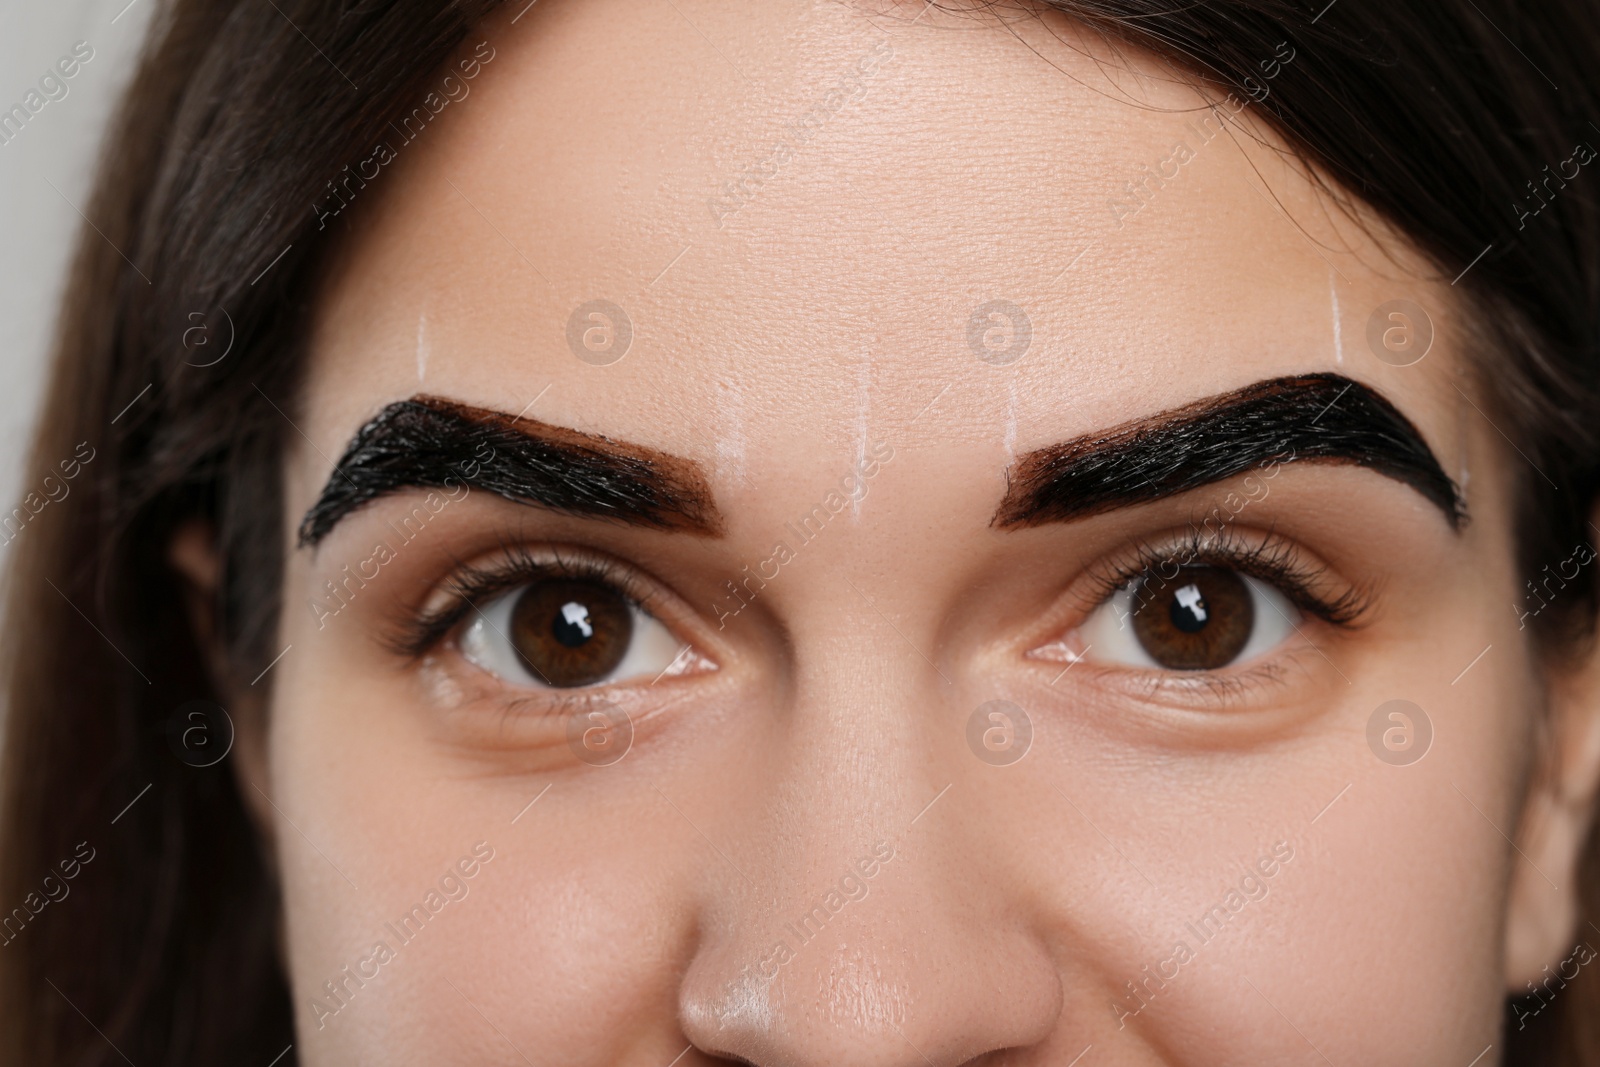 Photo of Woman during eyebrow tinting procedure, closeup view